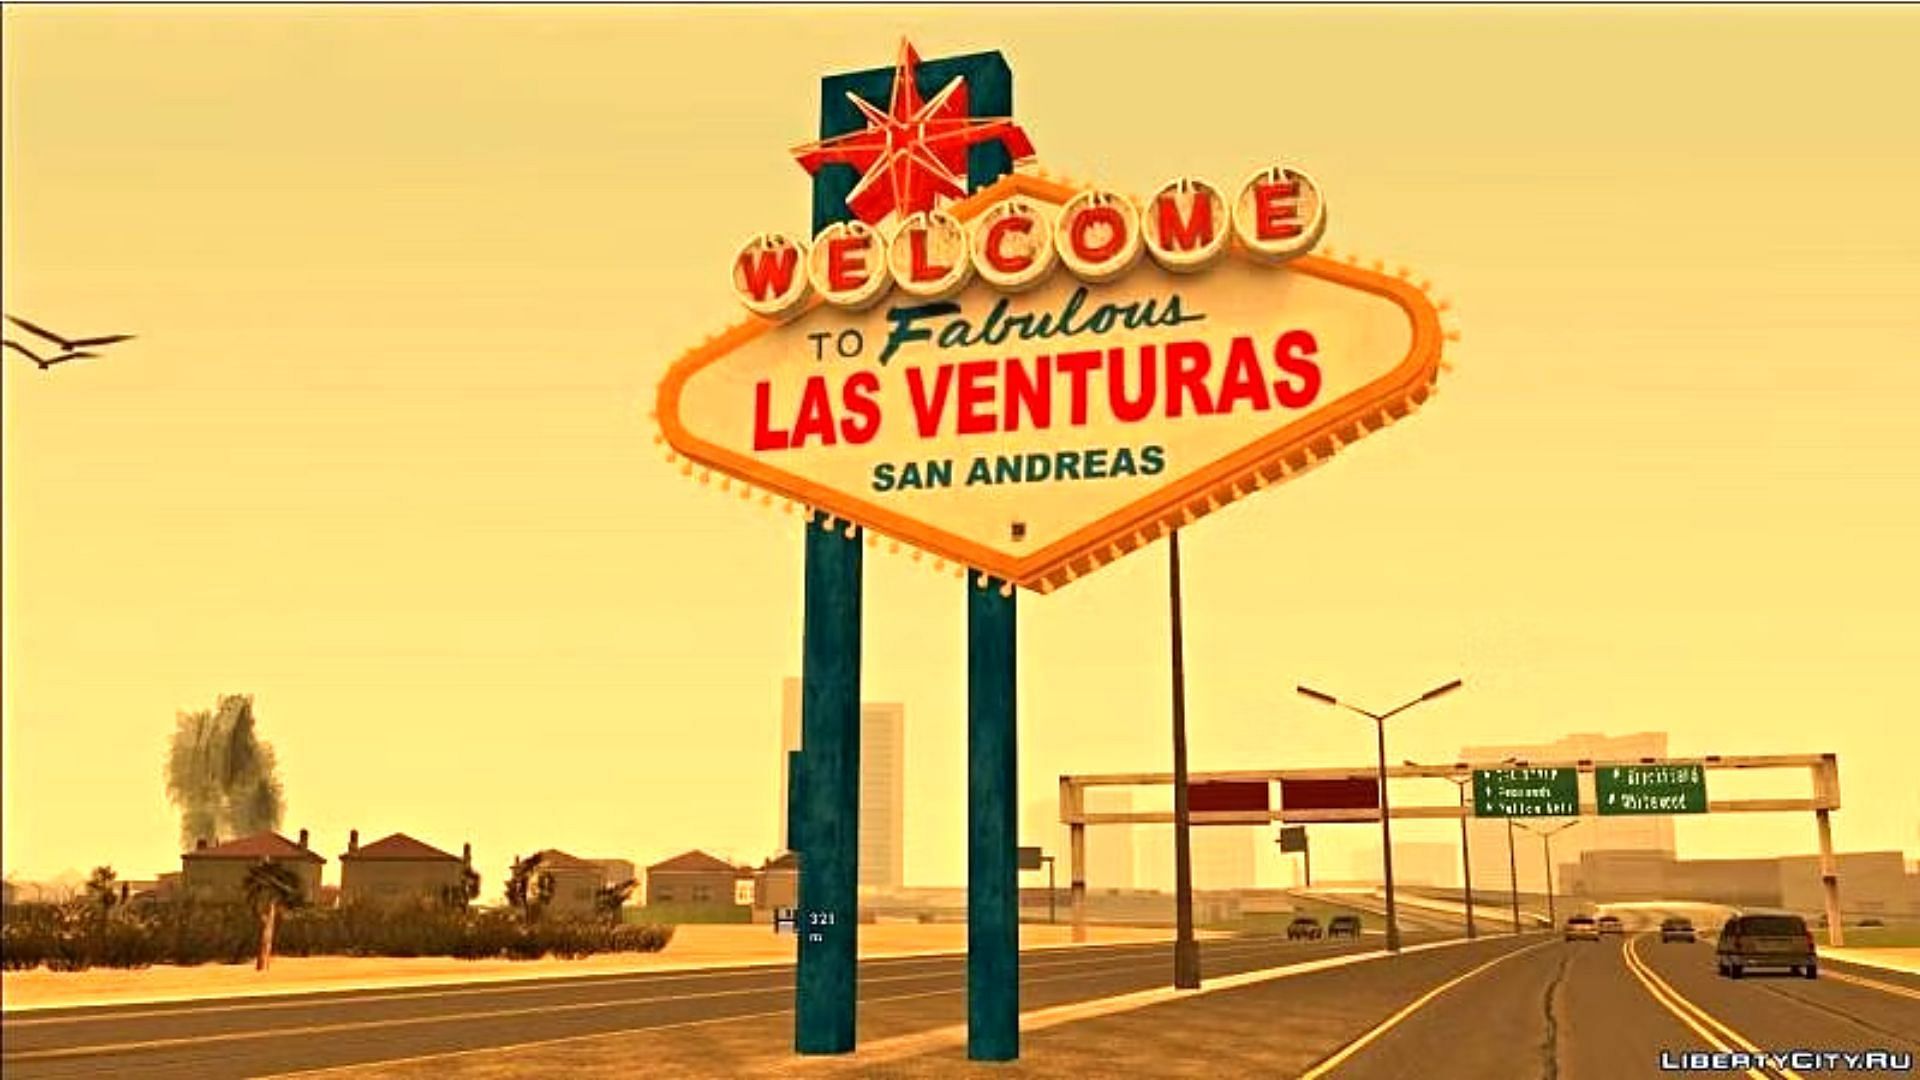 5 Things That Make Las Venturas An Unforgettable City In Gta San Andreas